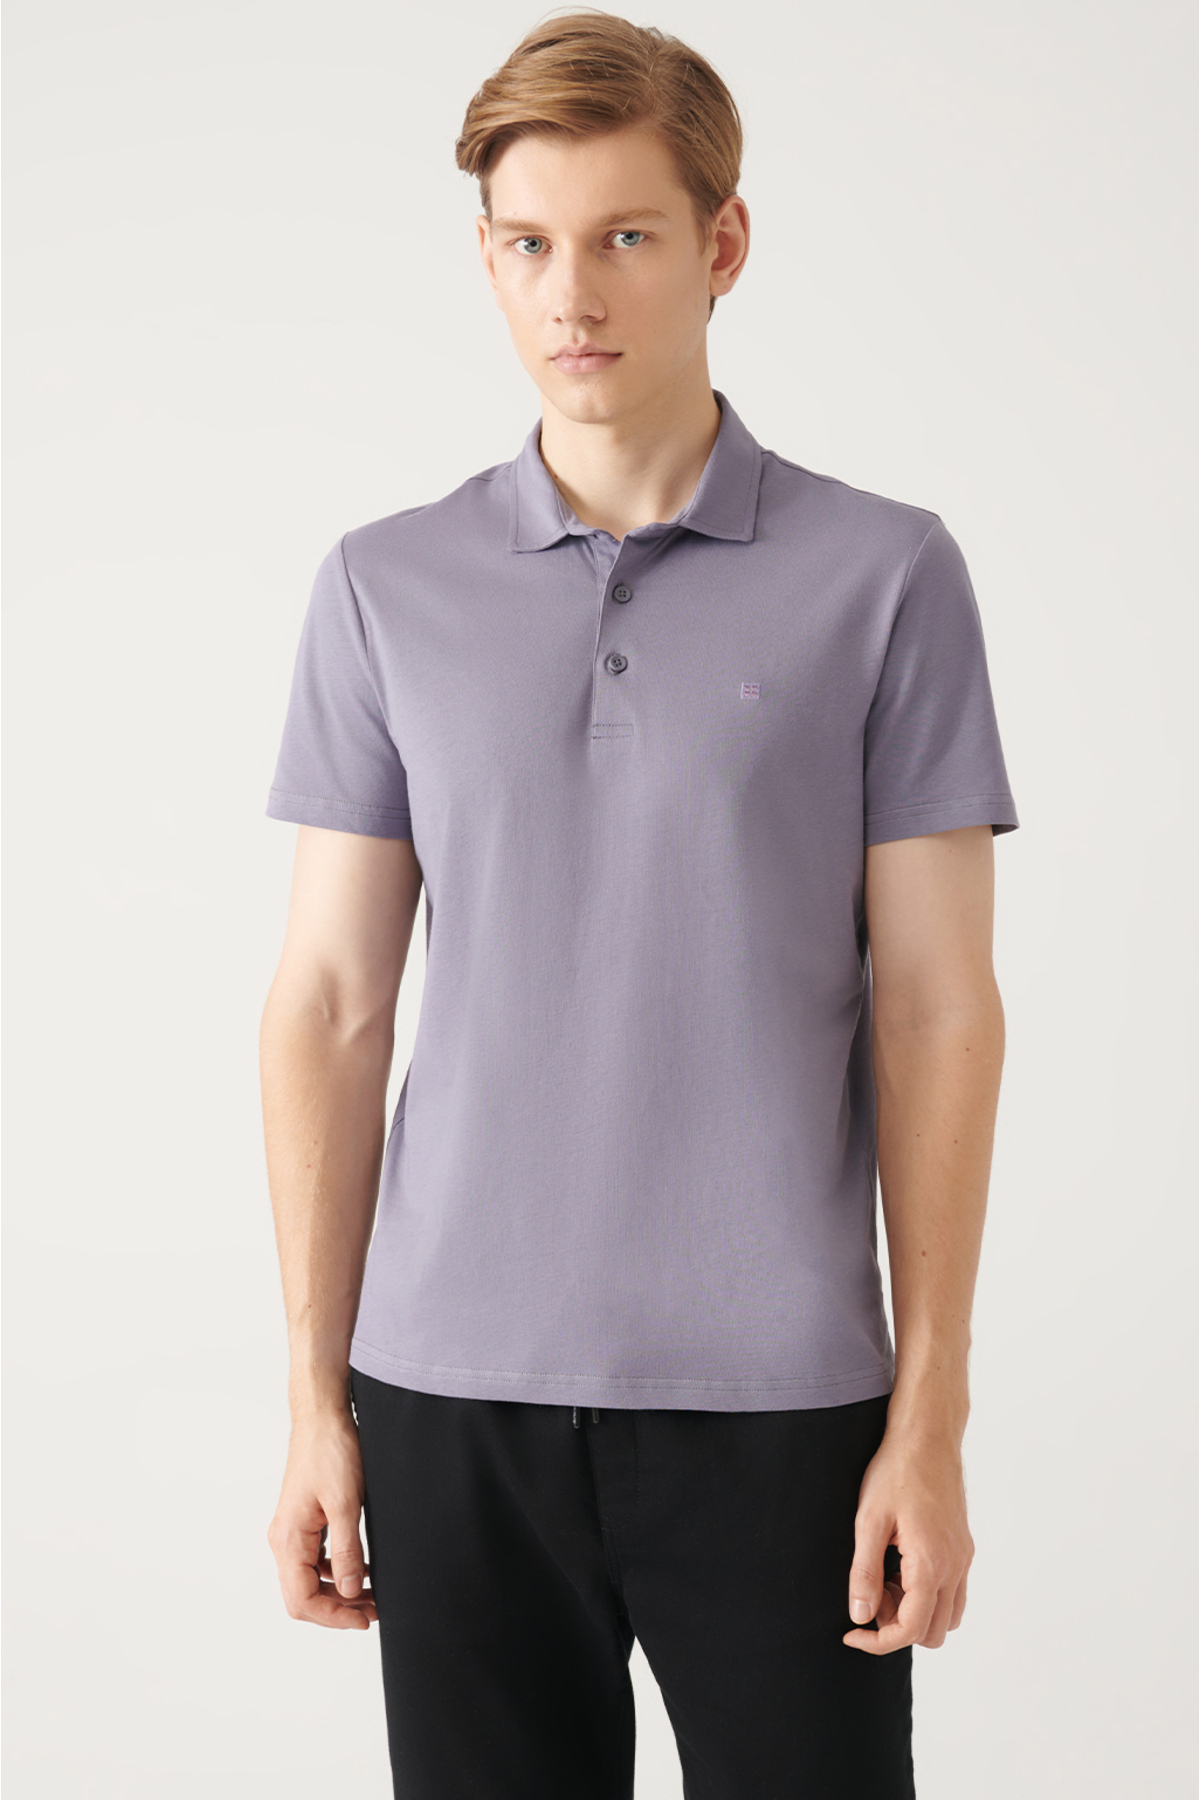 Avva Men's Lilac 100% Cotton Standard Fit Normal Cut 3 Buttons Anti-roll Polo T-shirt